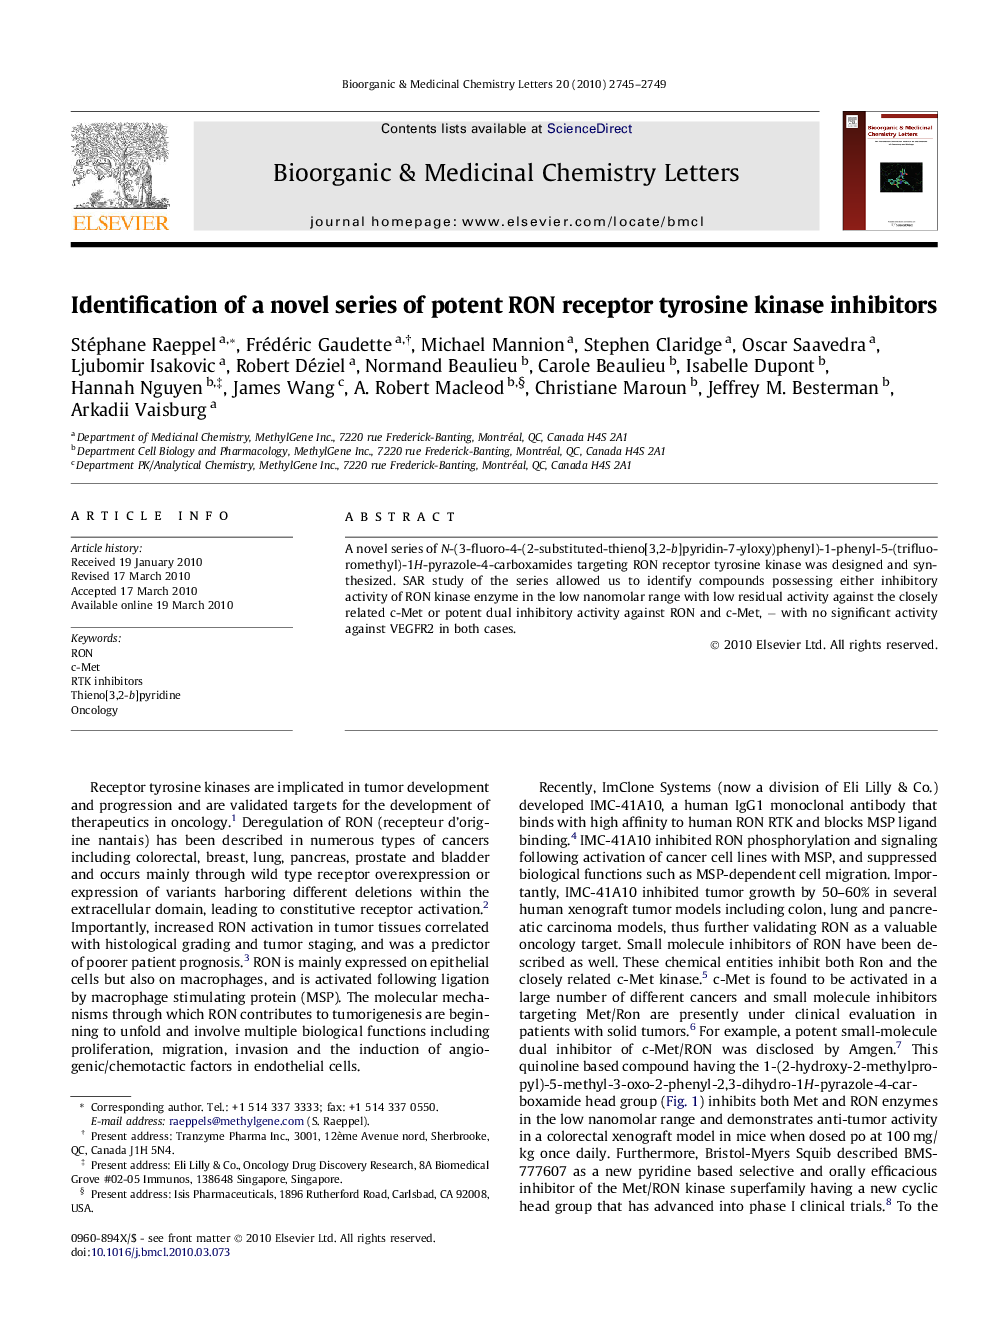 Identification of a novel series of potent RON receptor tyrosine kinase inhibitors